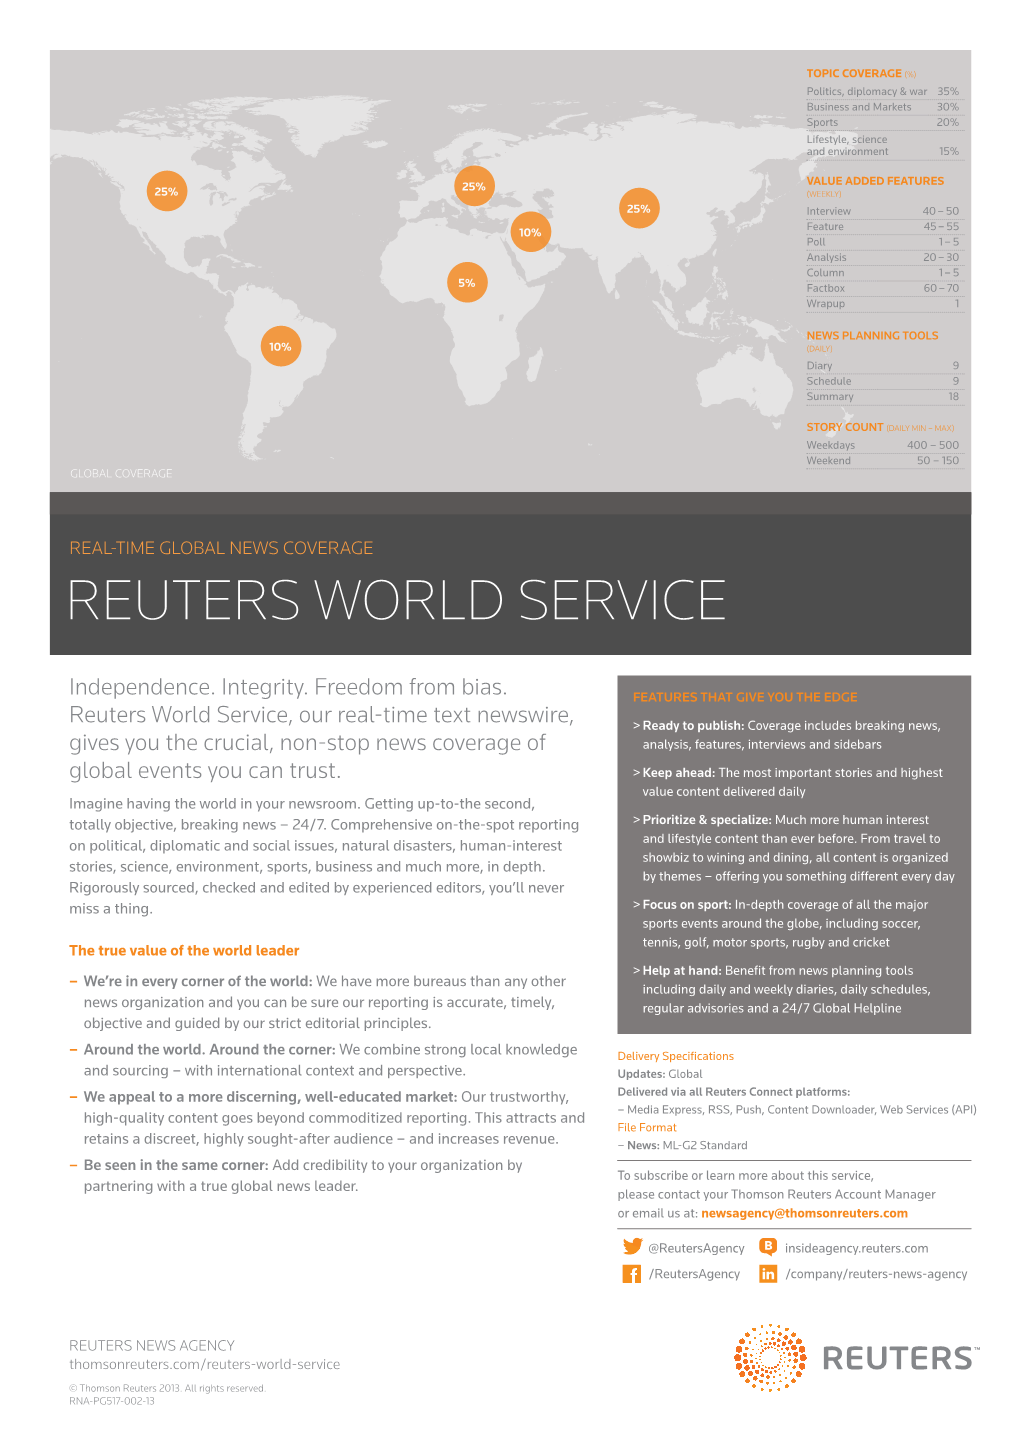 Reuters World Service